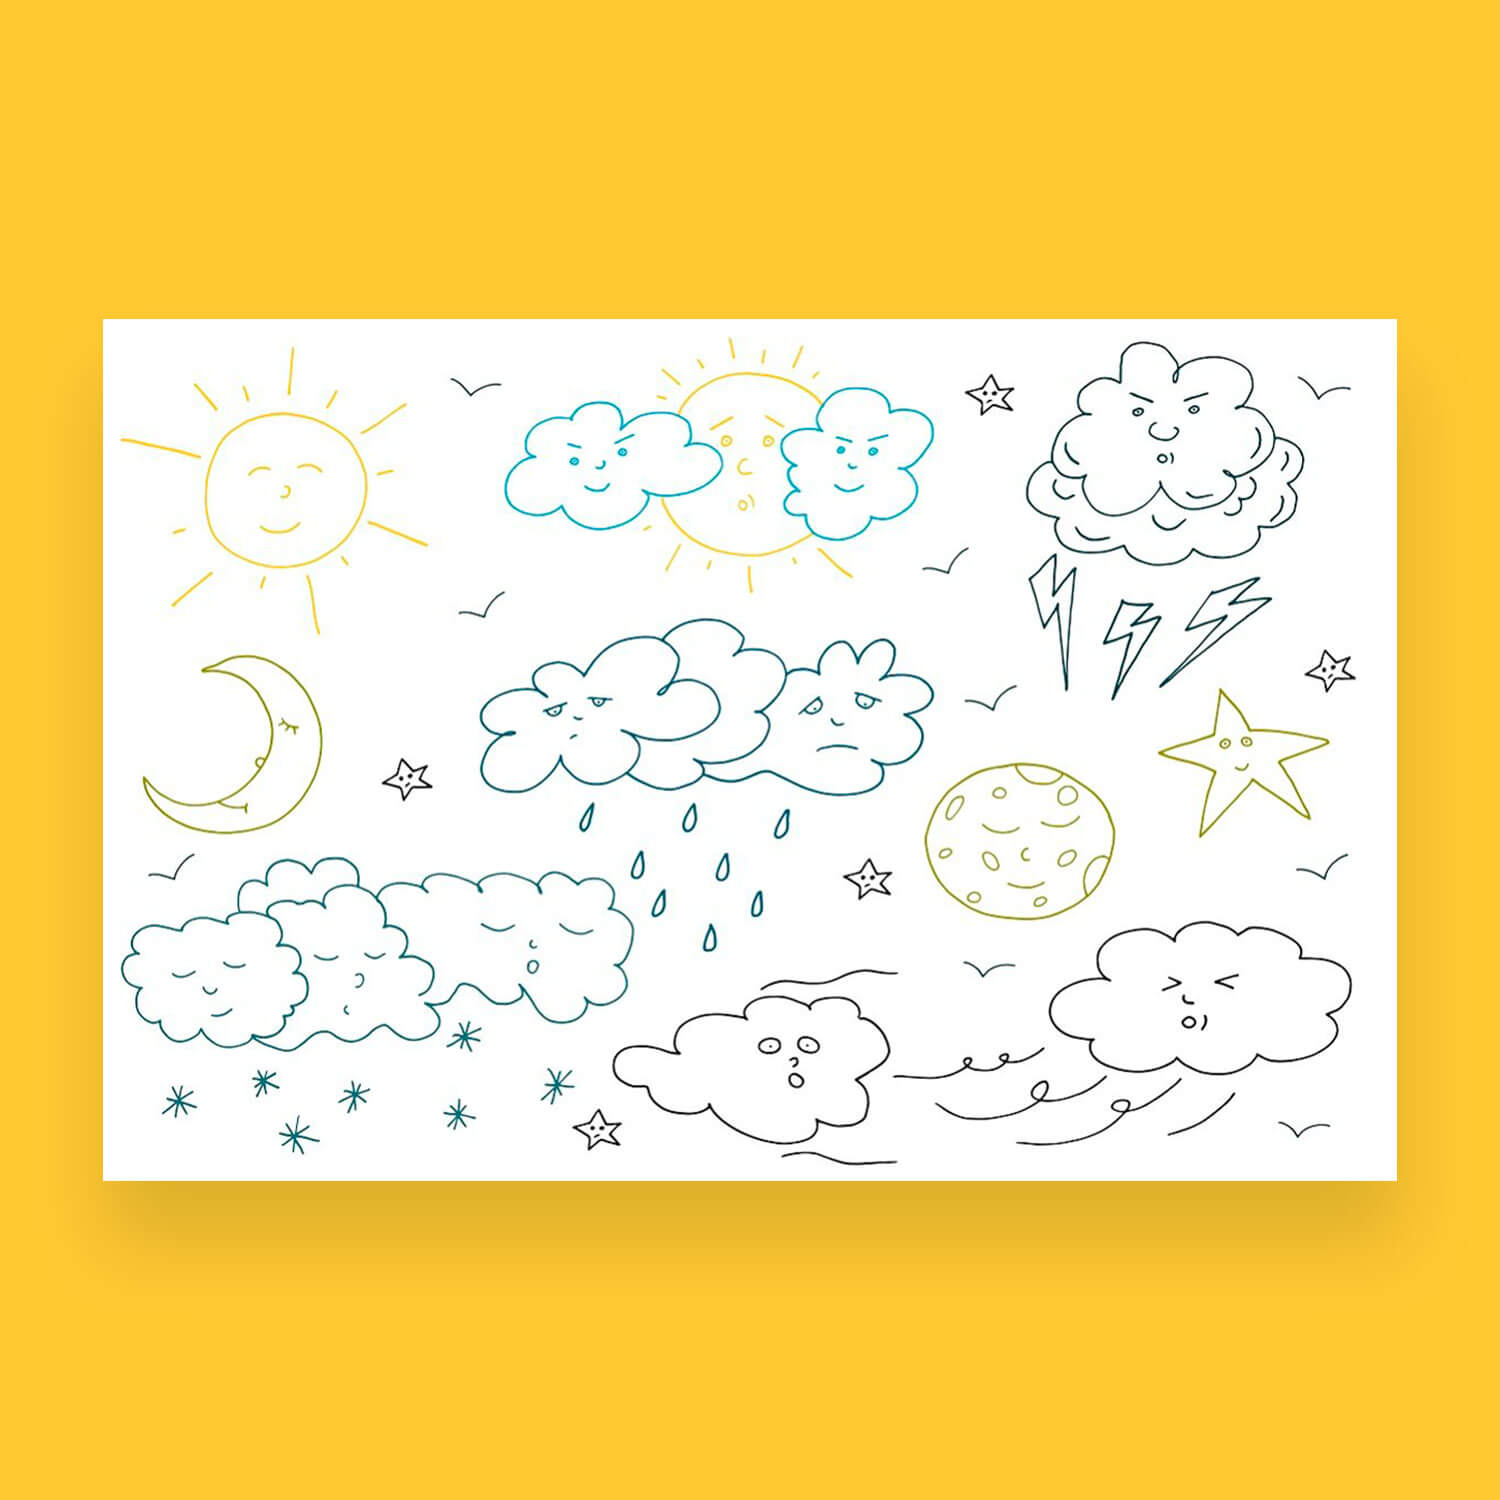 Different set of weather phenomena hand drawn doodles.